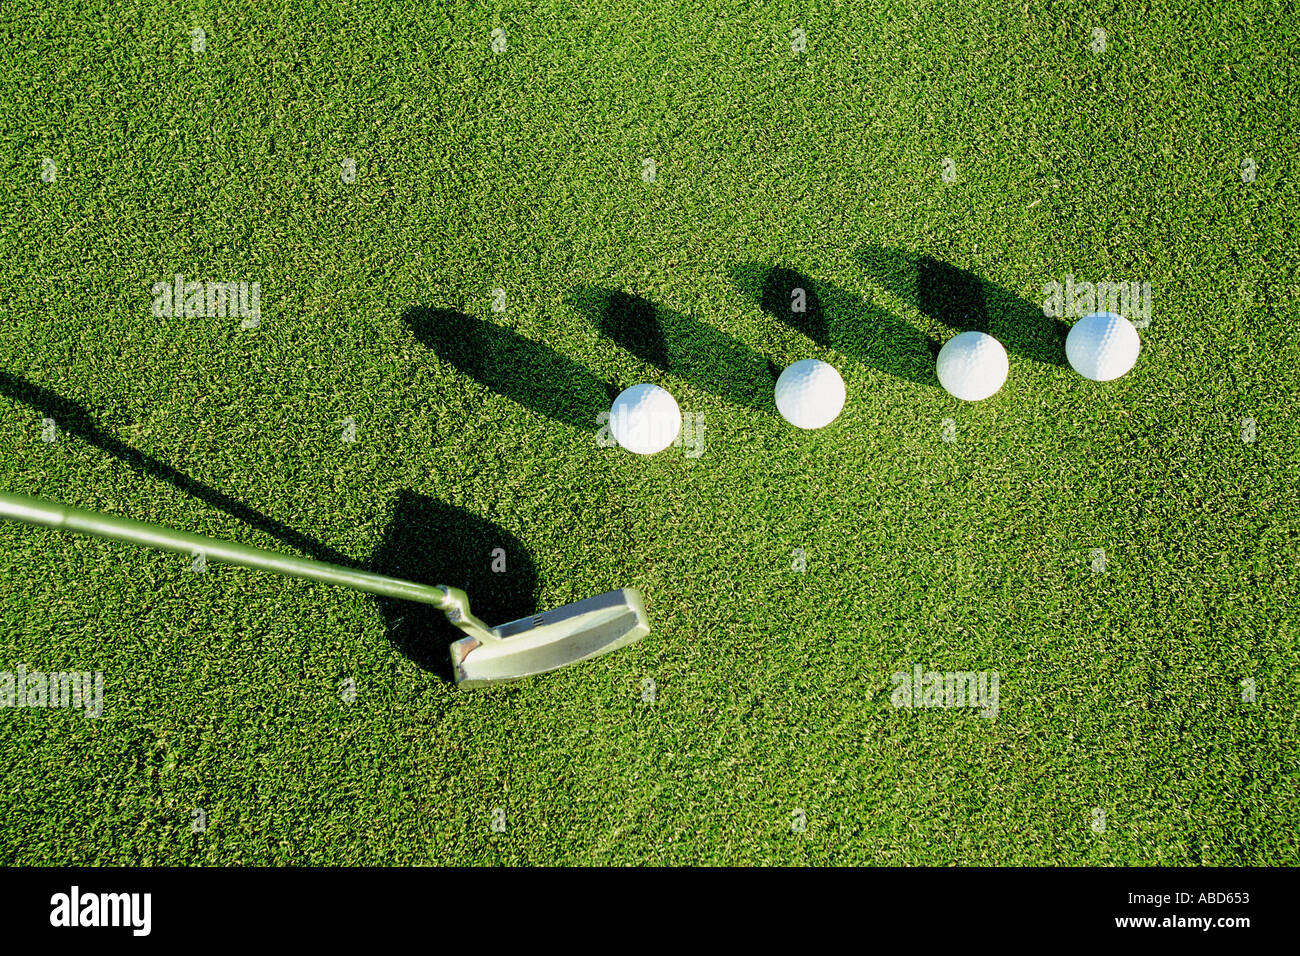 Golf stick and balls Stock Photo